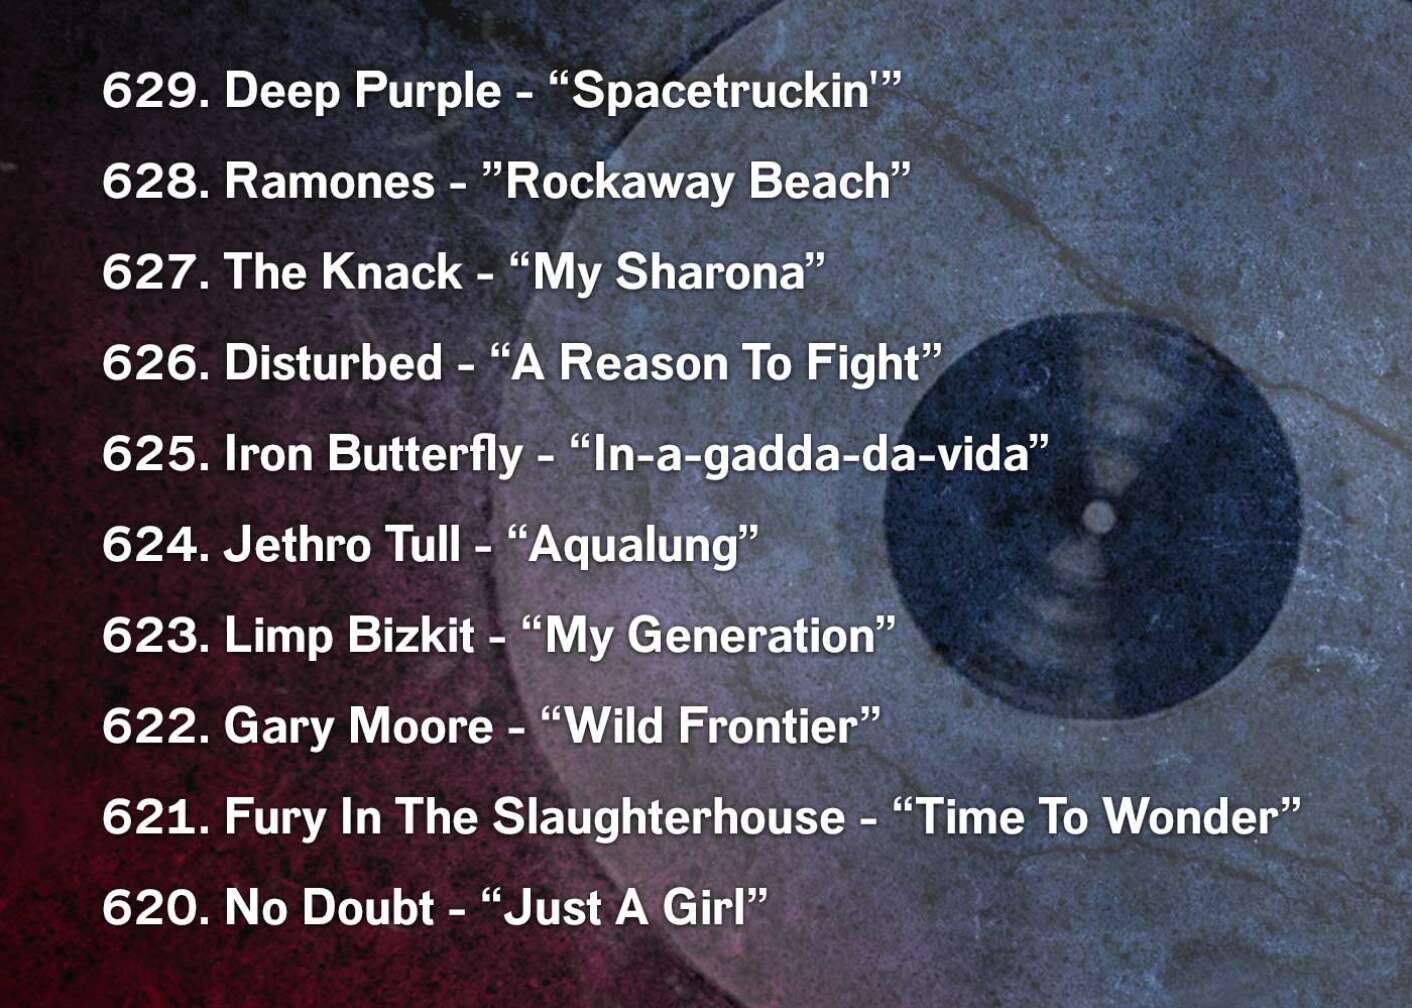 629. Deep Purple - “Spacetruckin'” 628. Ramones - ”Rockaway Beach” 627. The Knack - “My Sharona” 626. Disturbed - “A Reason To Fight” 625. Iron Butterfly - “In-a-gadda-da-vida” 624. Jethro Tull - “Aqualung” 623. Limp Bizkit - “My Generation” 622. Gary Moore - “Wild Frontier” 621. Fury In The Slaughterhouse - “Time To Wonder” 620. No Doubt - “Just A Girl”